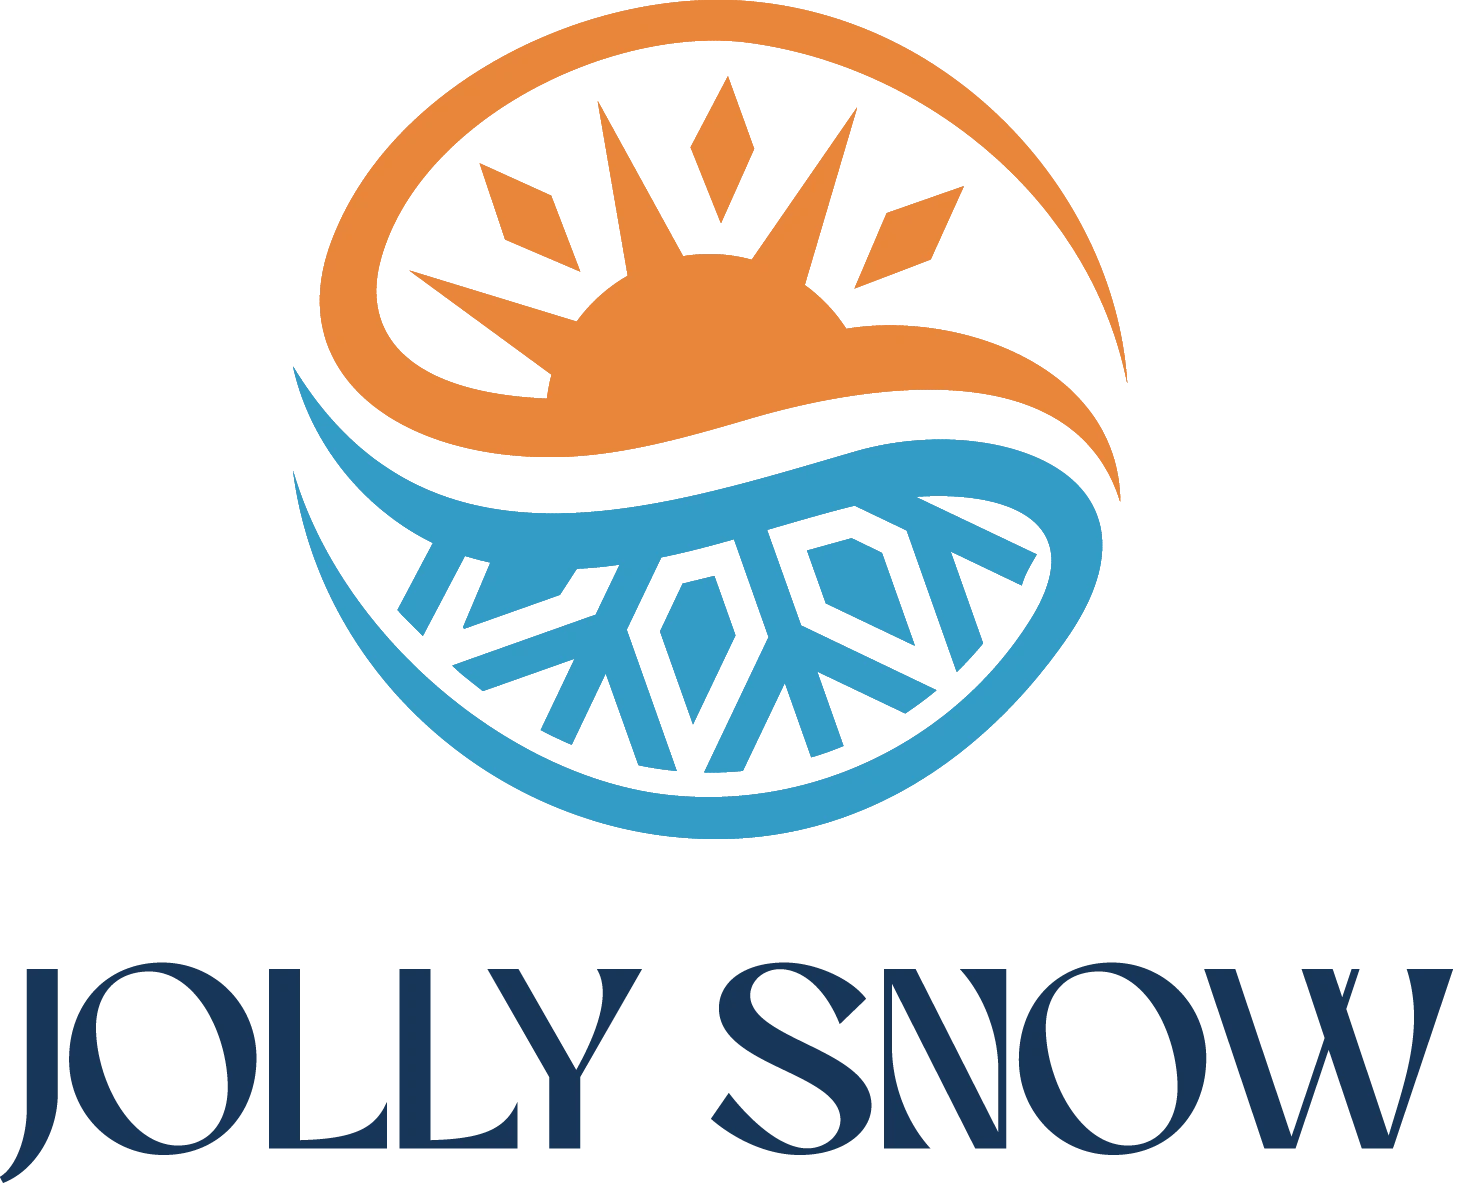 Jolly Snow